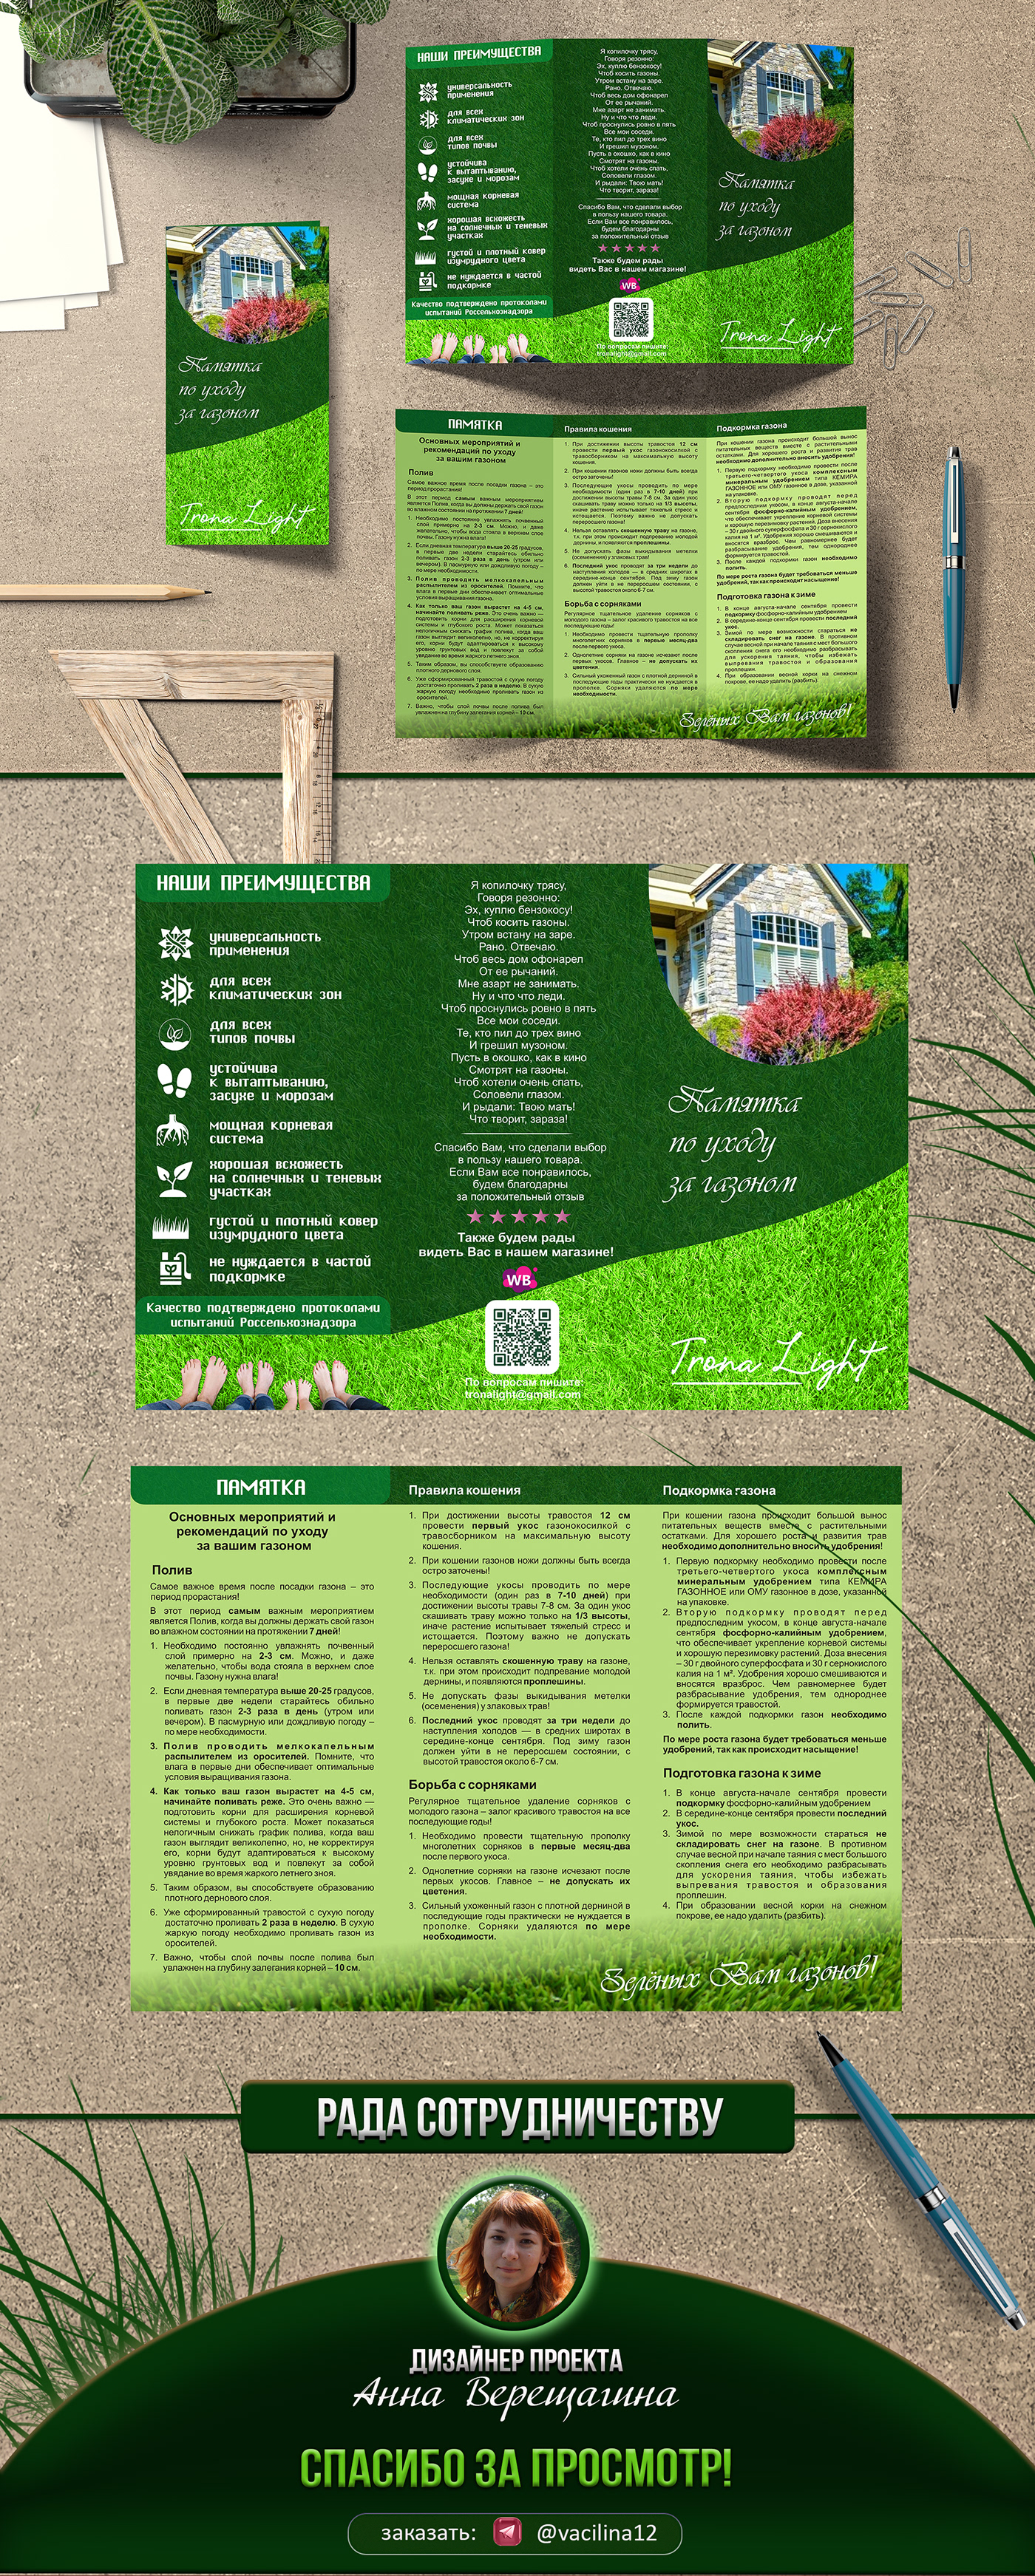 wildberries буклет газон флаер полиграфия листовка фирменный стиль брендинг брошура рекламный